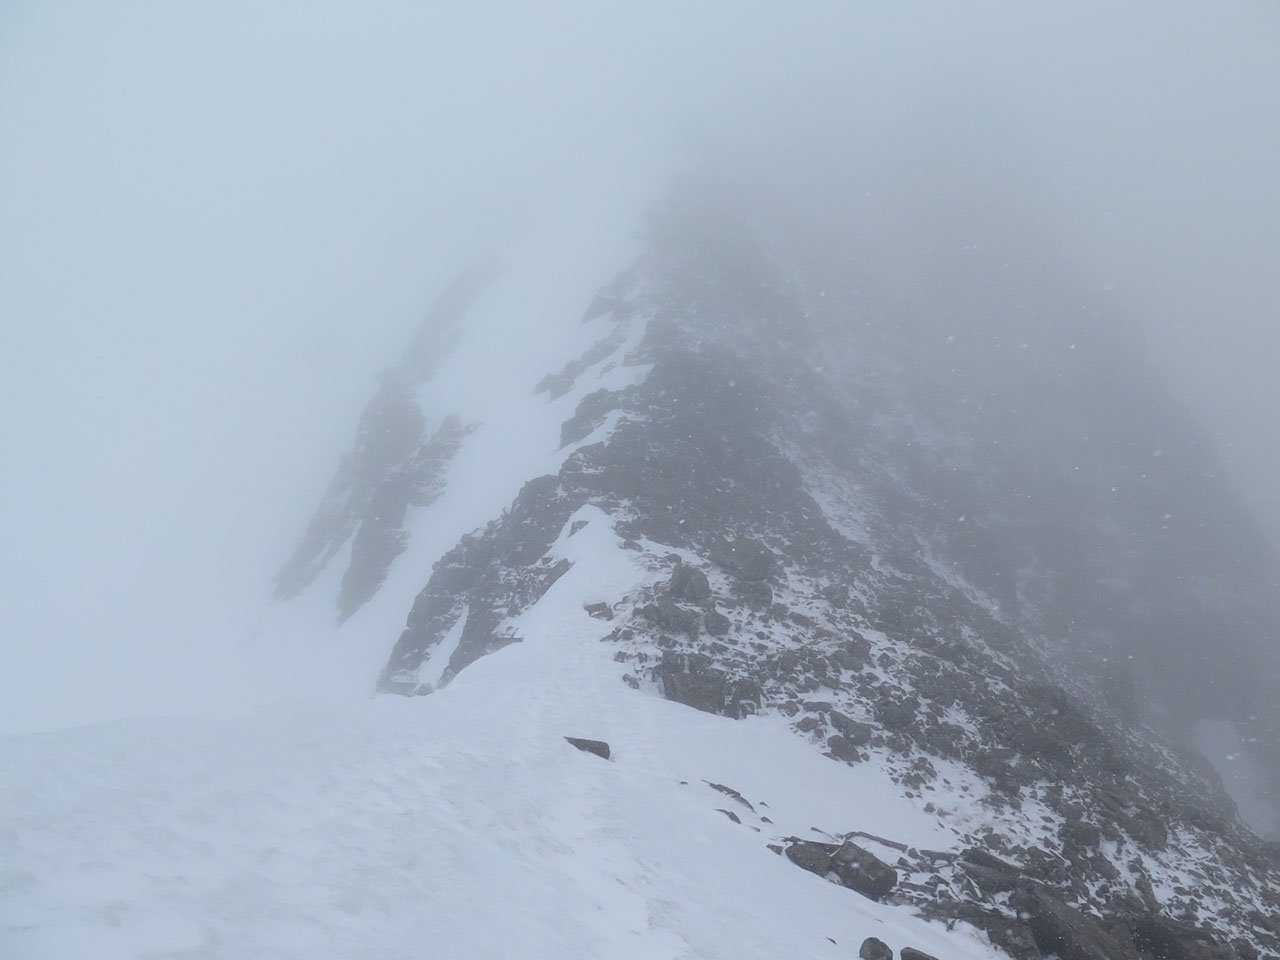 Poor visibility up Diamond ridge to summit of Bidean